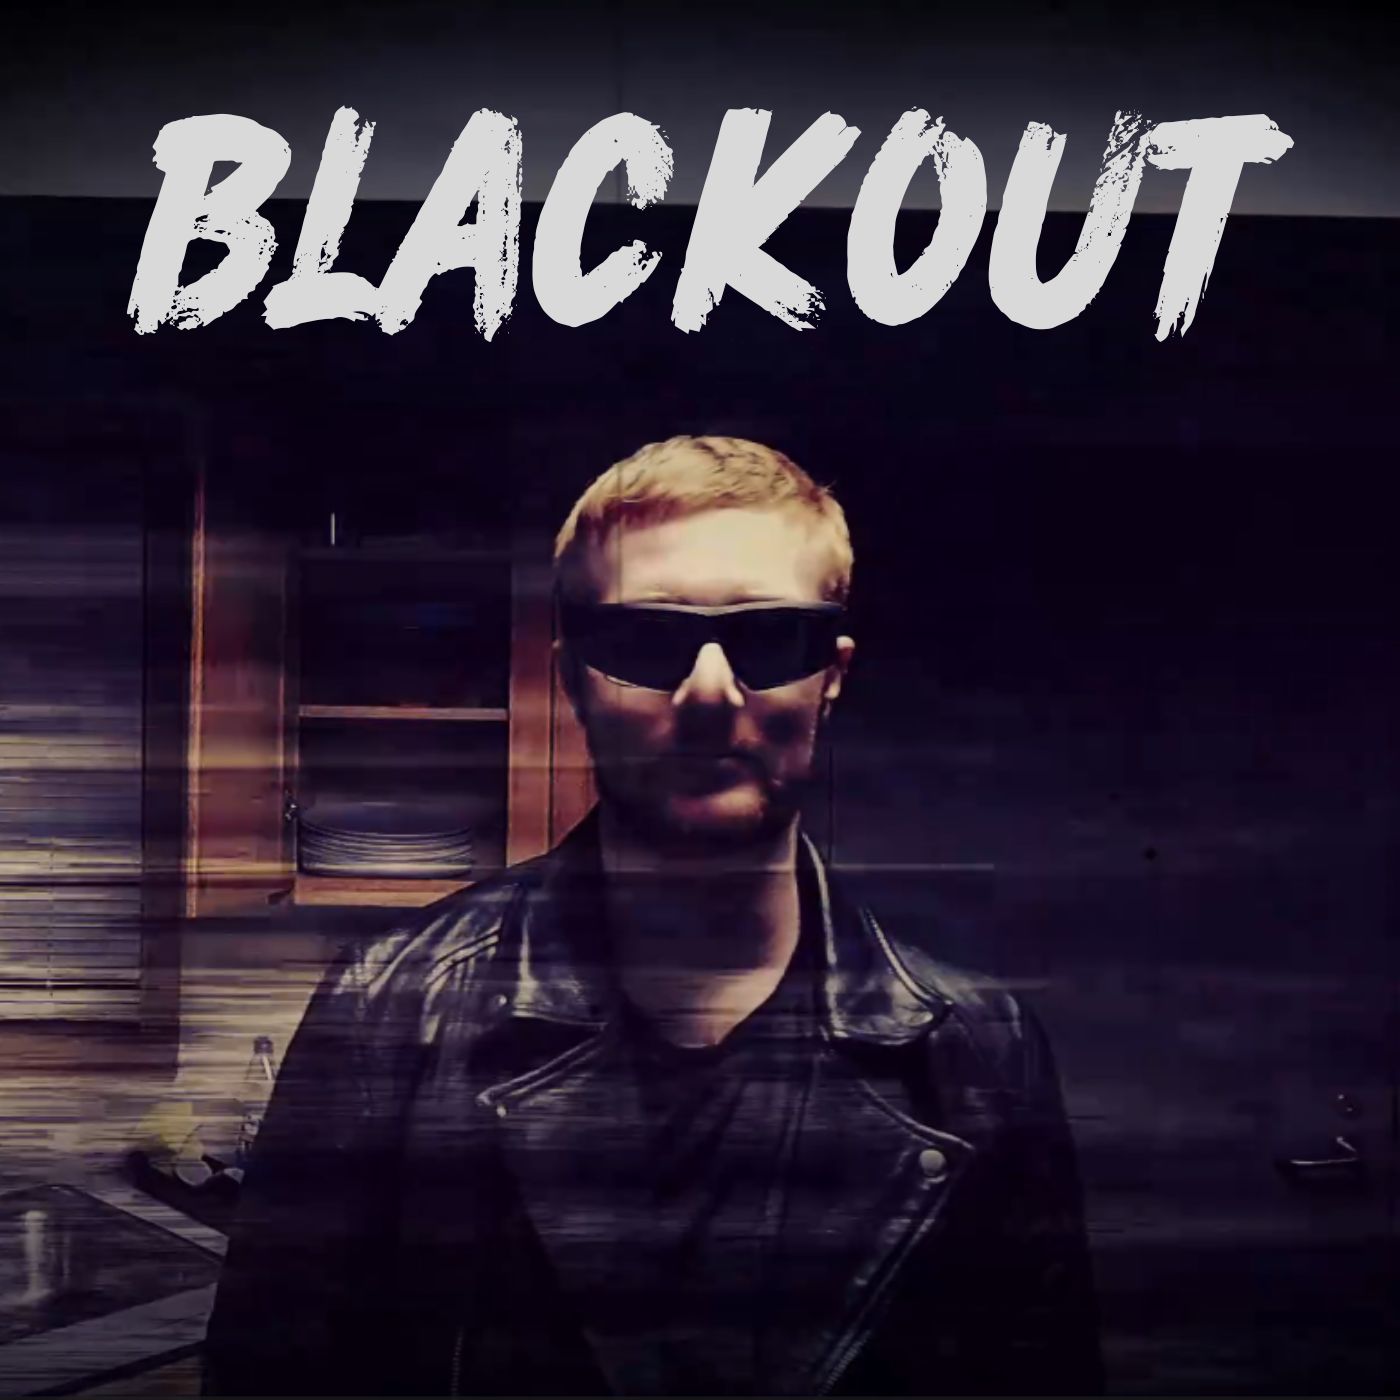 beetlebat — Blackout cover artwork